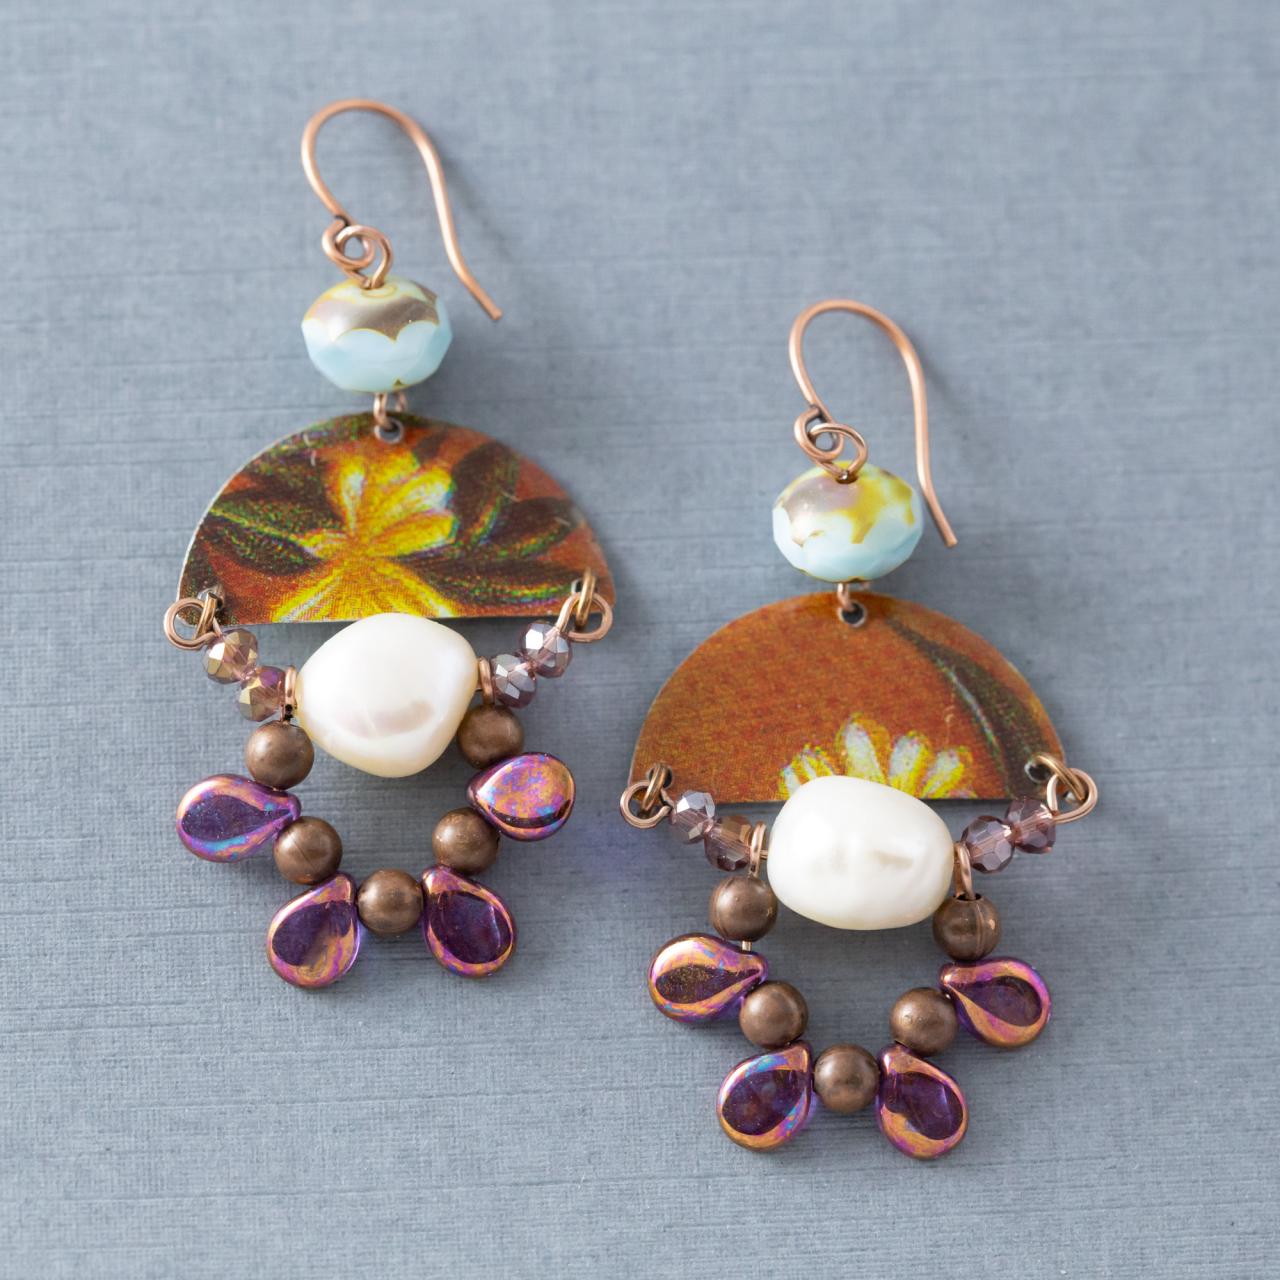 Half Circle Earrings, Freshwater Pearl Earrings, Brown, Blue And Purple Earrings, Flower Earrings, Bohemian Jewelry, Unique Jewelry